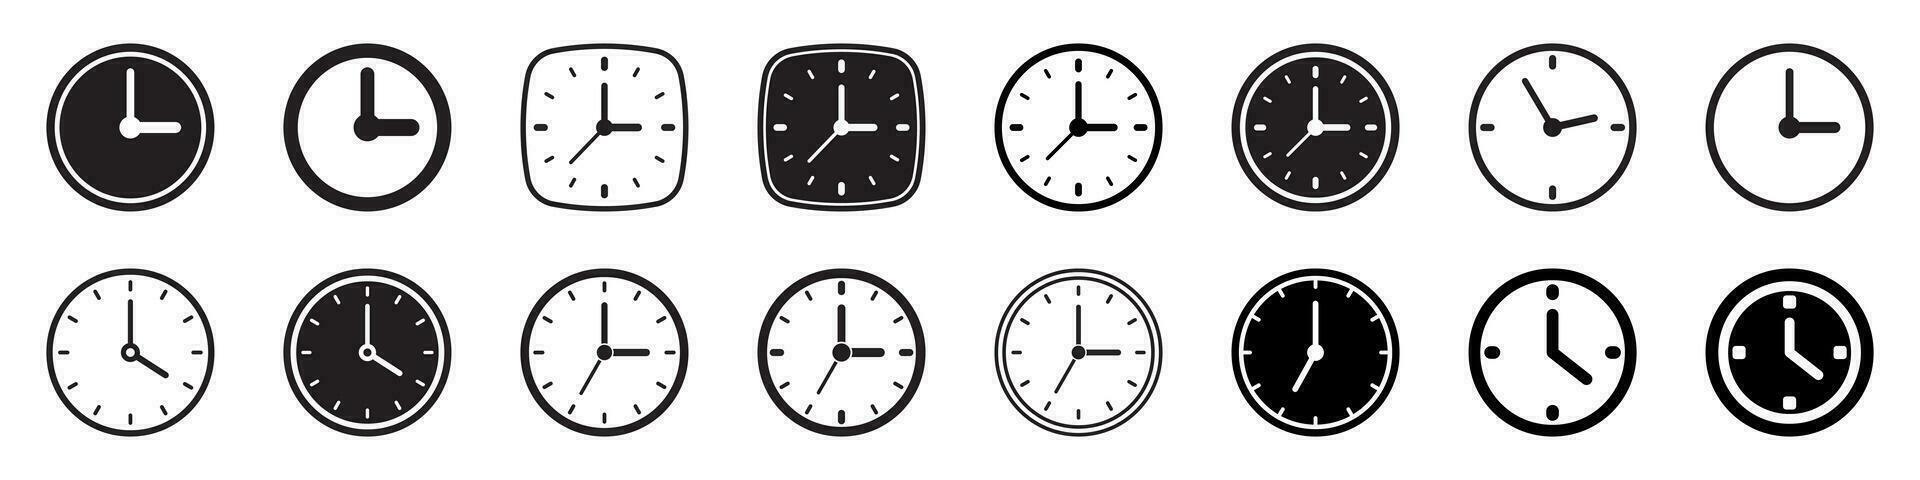 klocka ikon, tid ikon. vektor illustration.